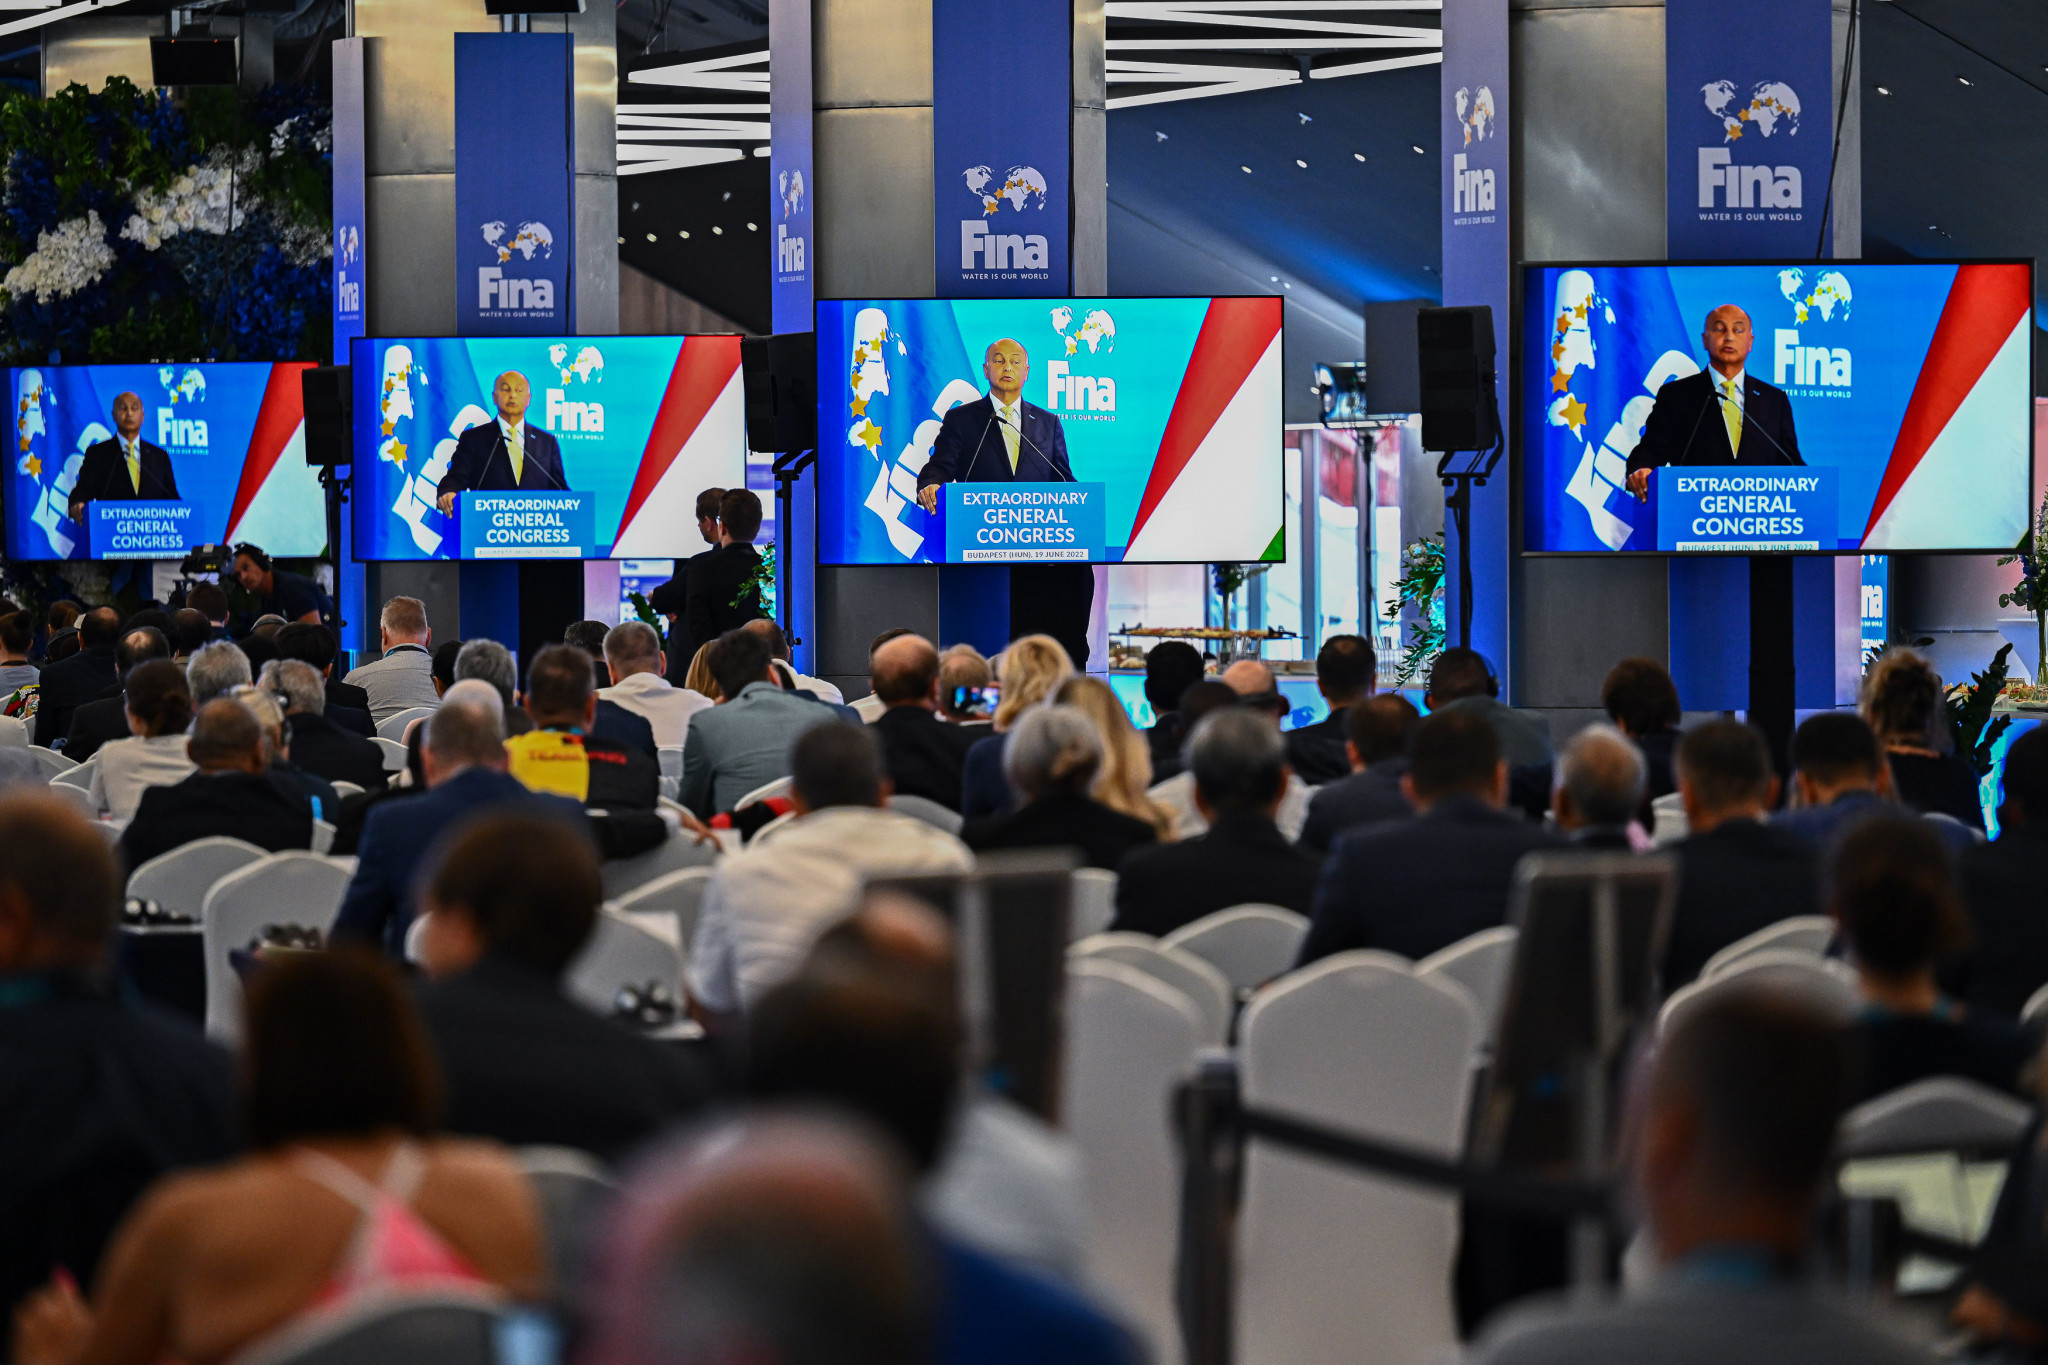 FINA President Husain Al-Musallam acknowledged that FINA's policy 